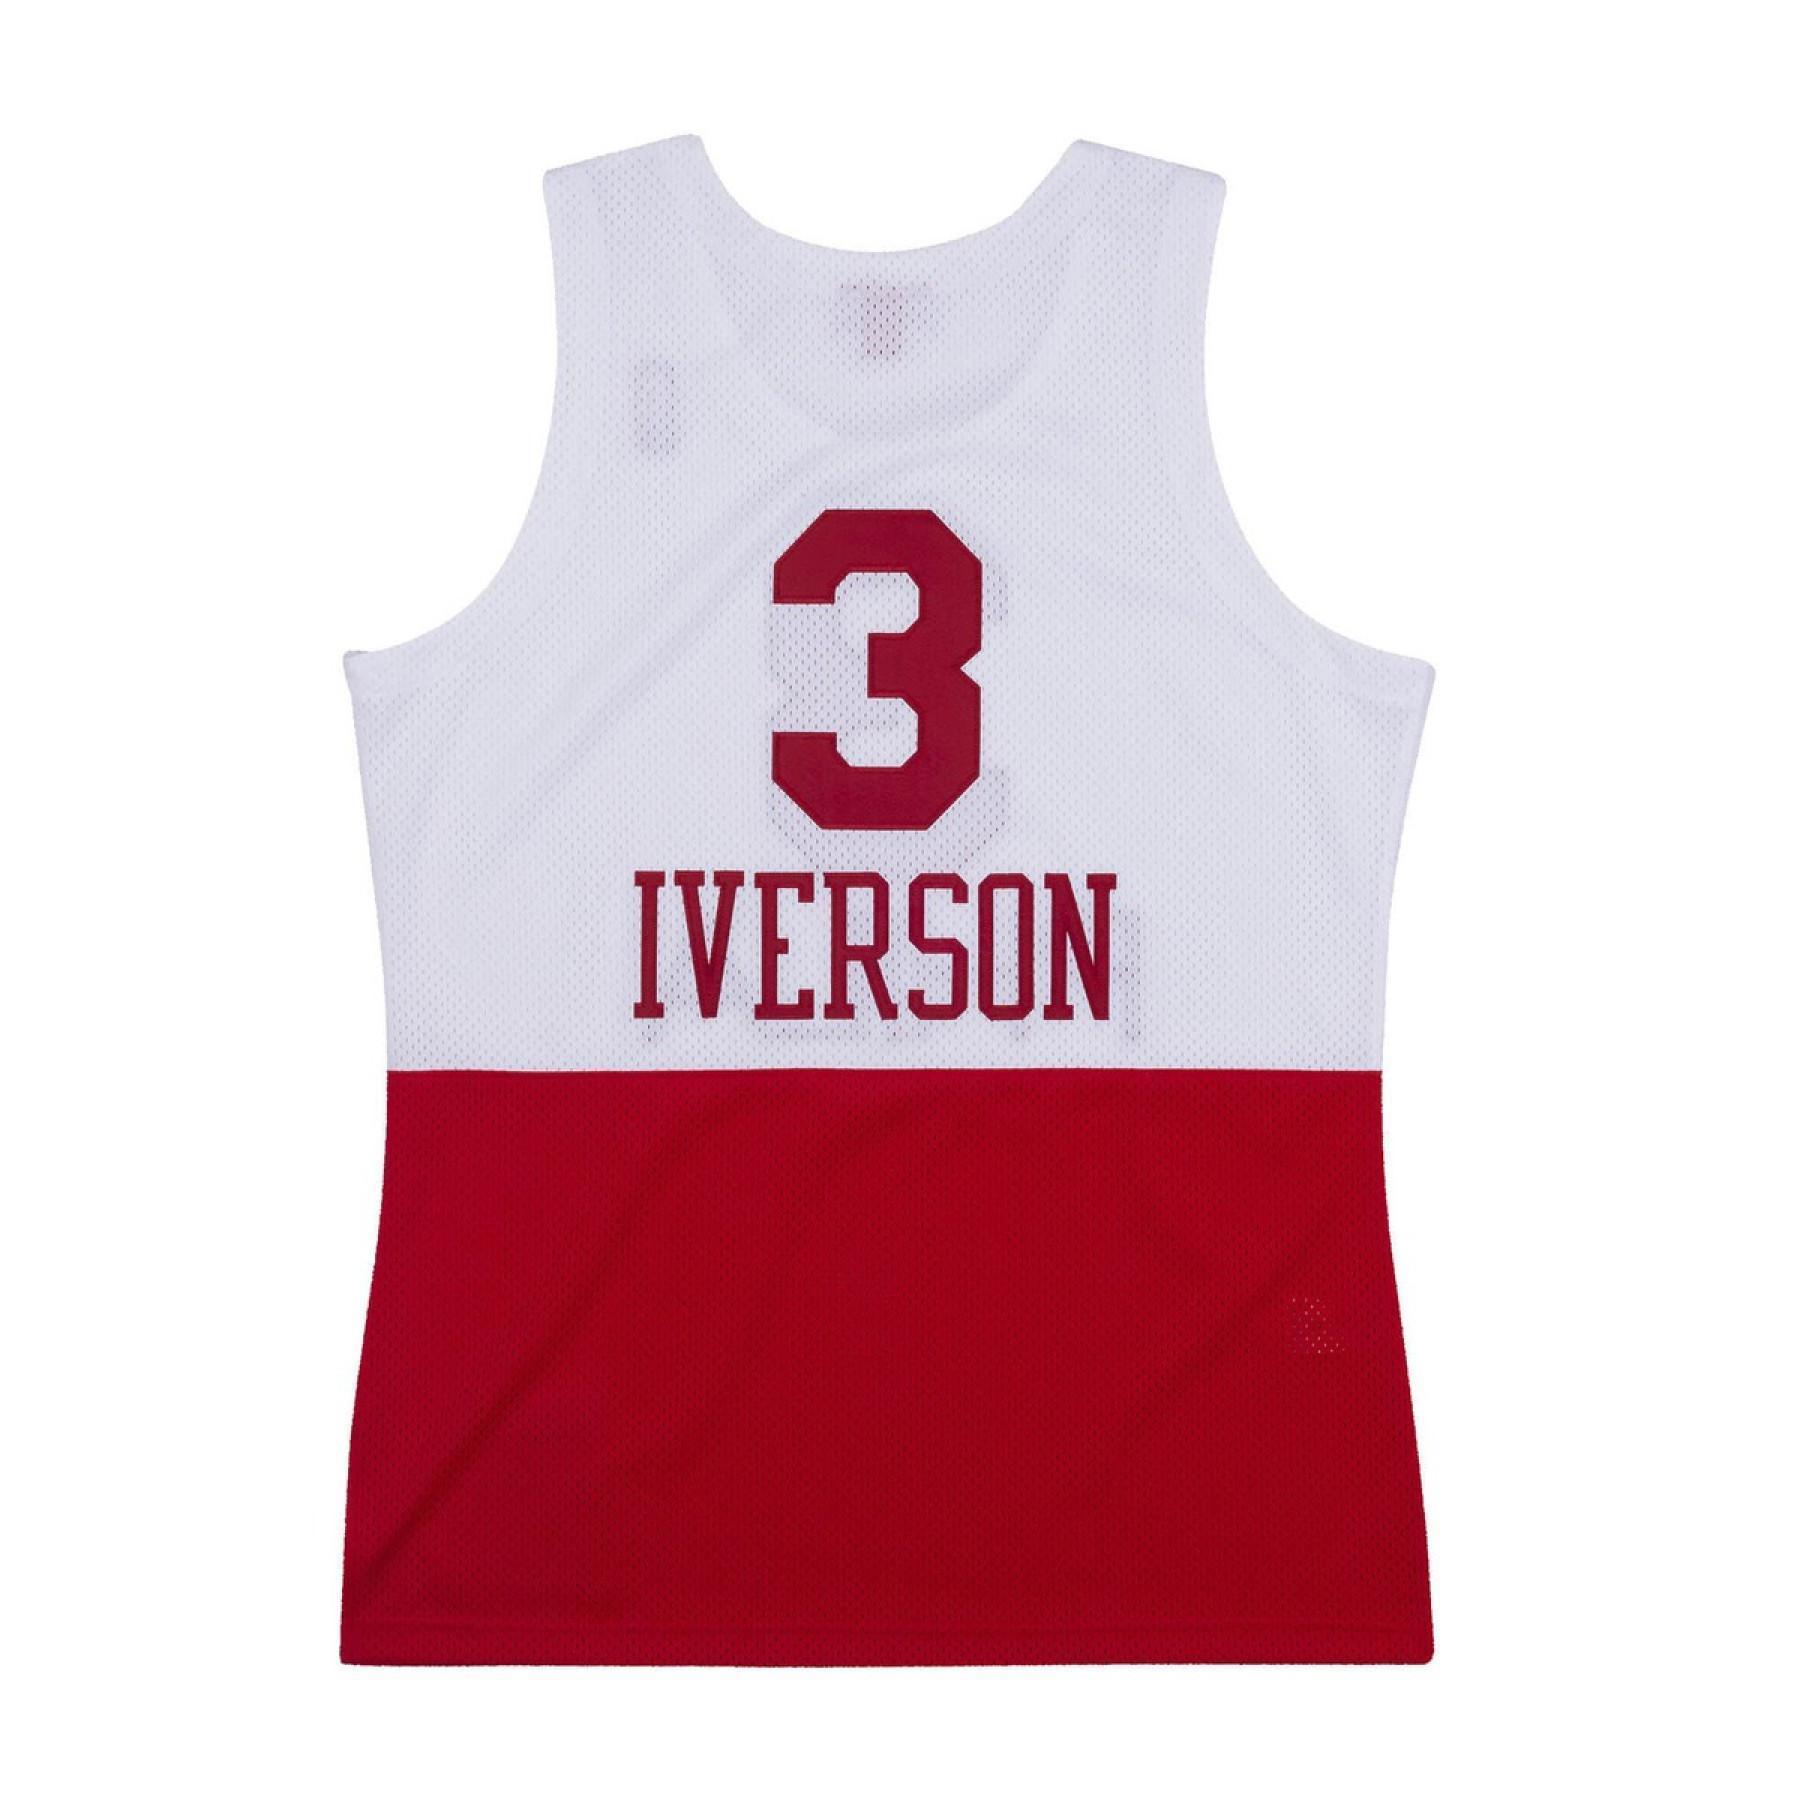 Autentyczna koszulka Philadelphia 76ers alternate Allen Iverson